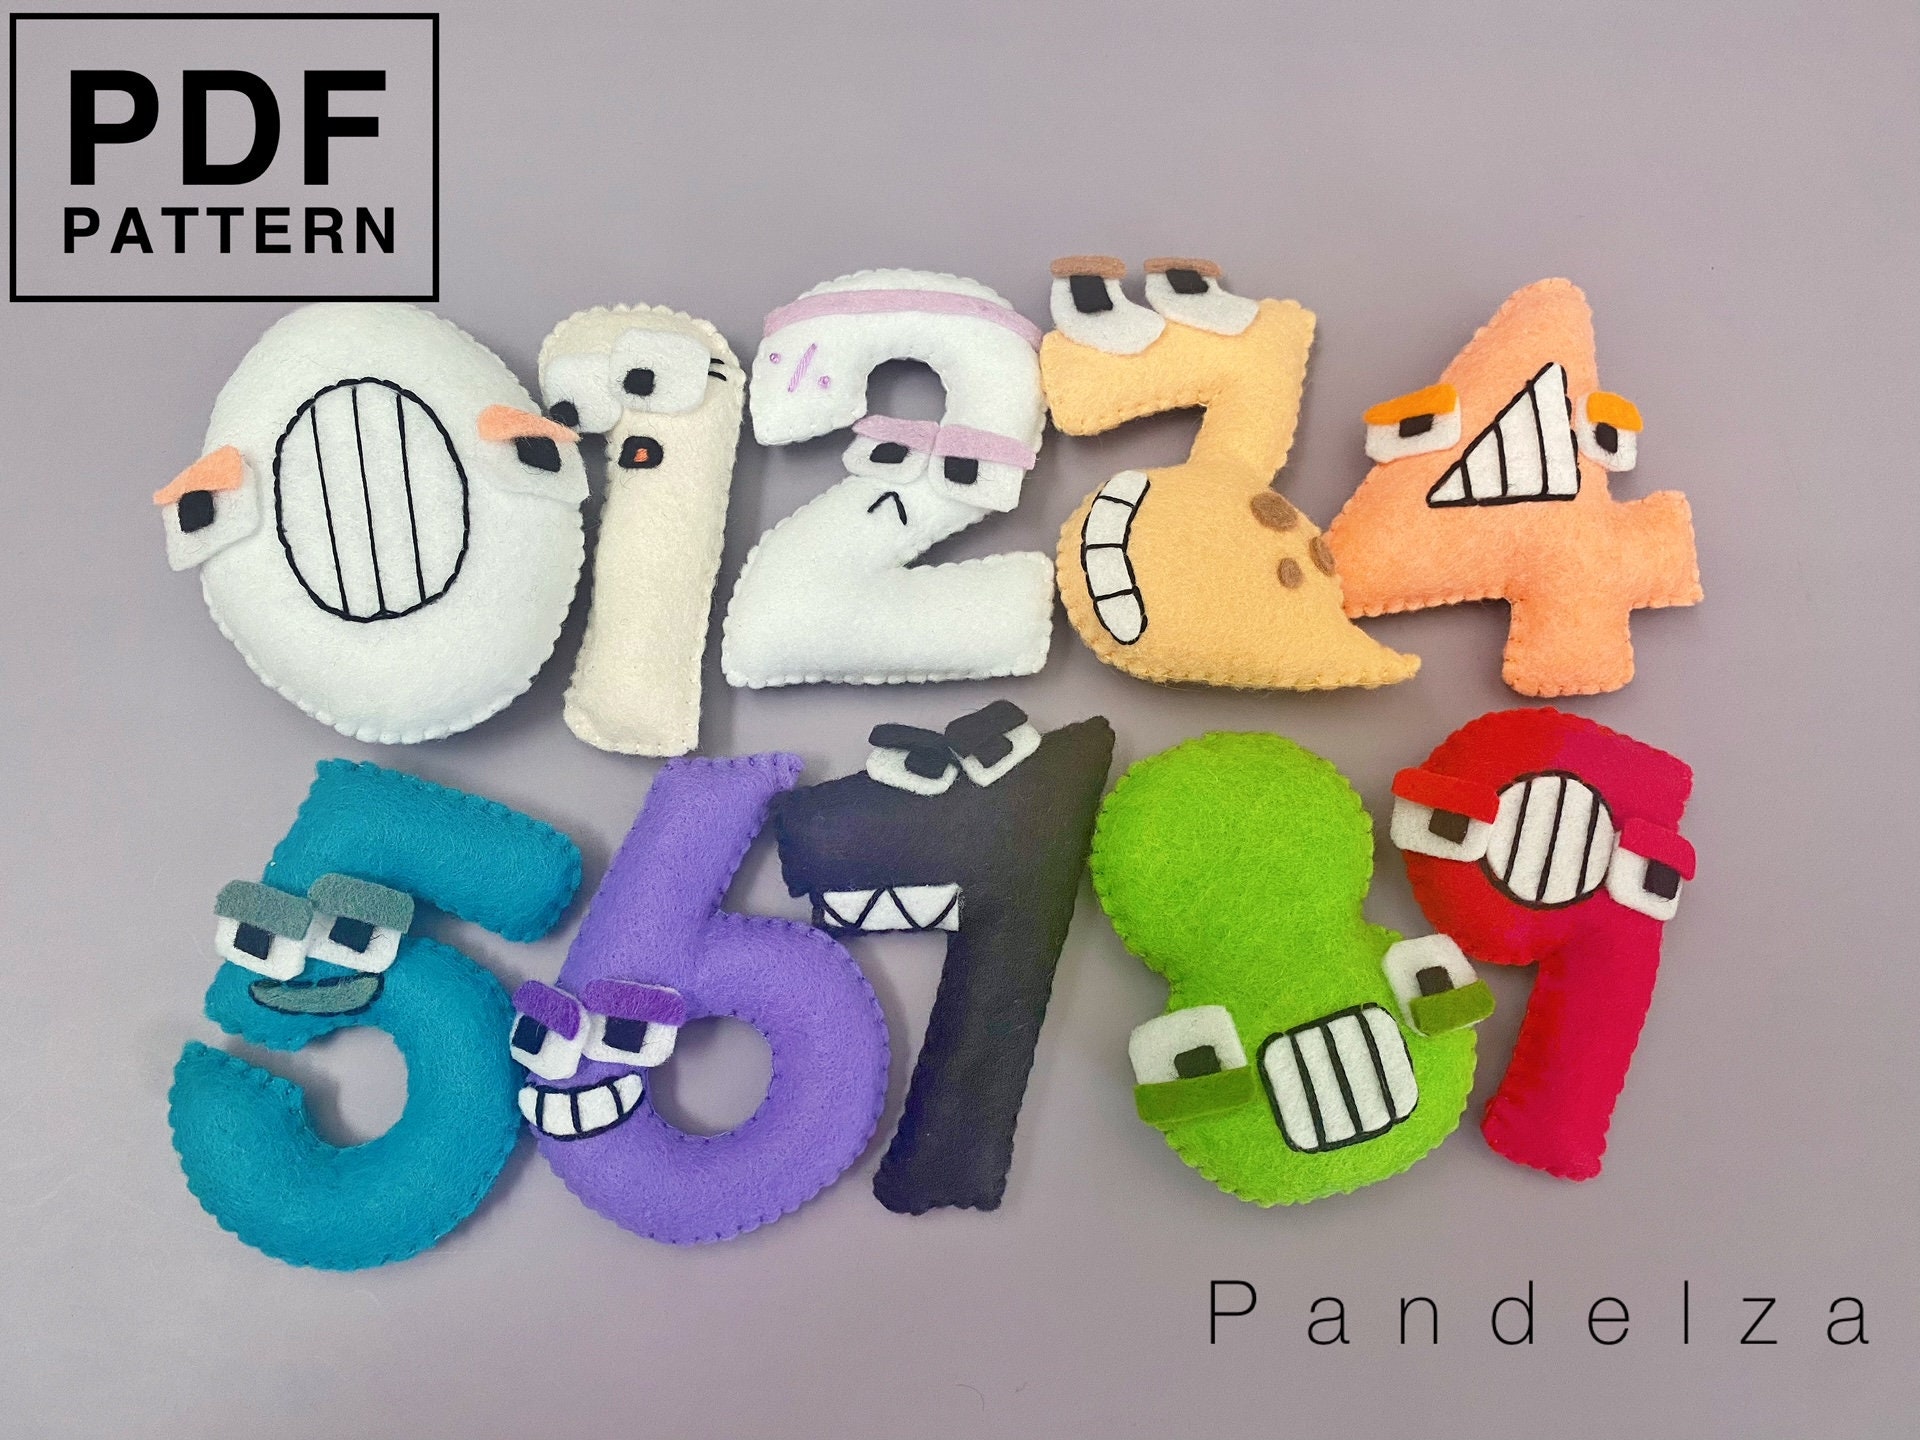 Alphabet Lore letter A felt stuffed toy. Hand sewing toy., Pandelza Felt  Crafts, Pandelza Felt Crafts · Original audio